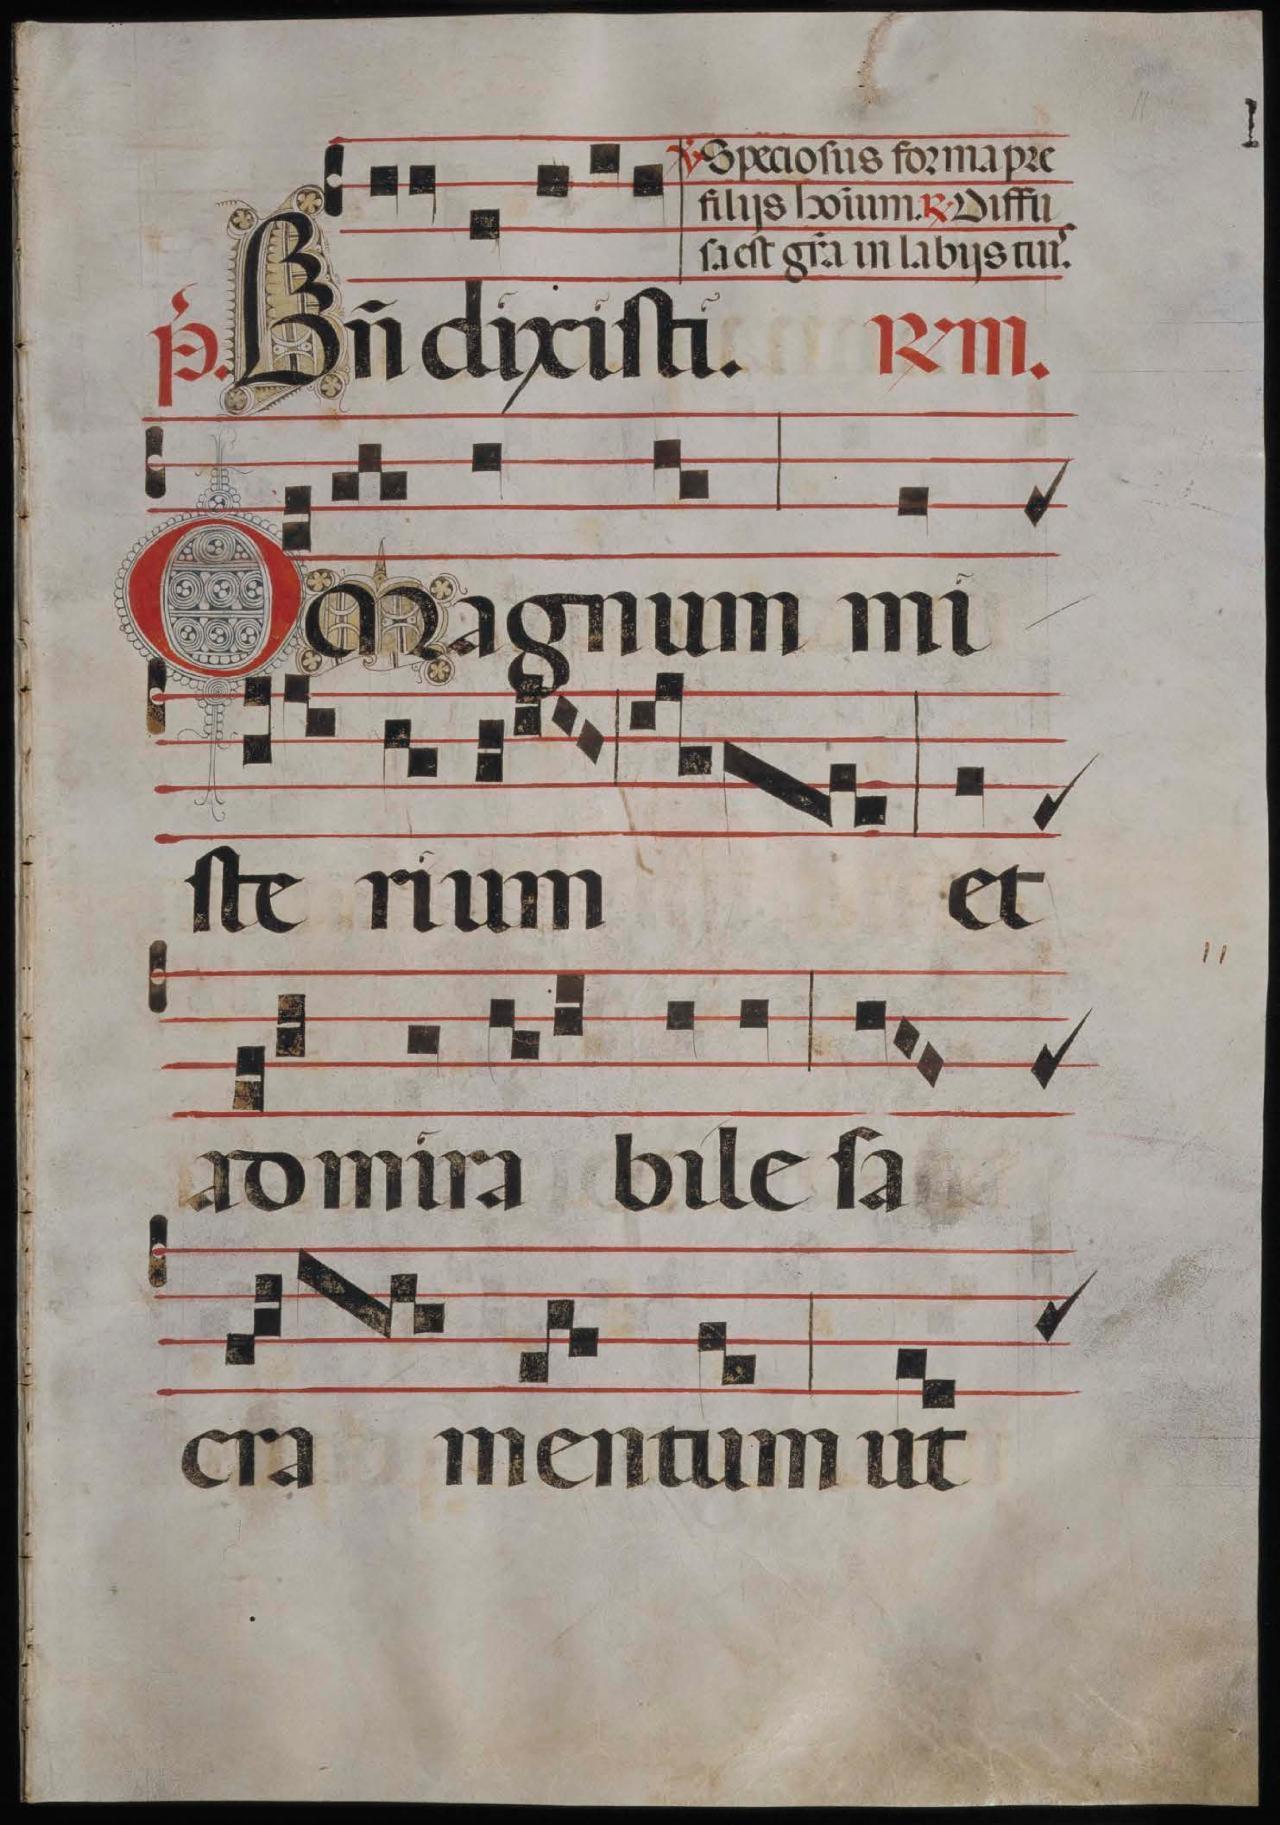 Page 21 of the Antiphonal illuminated manuscript